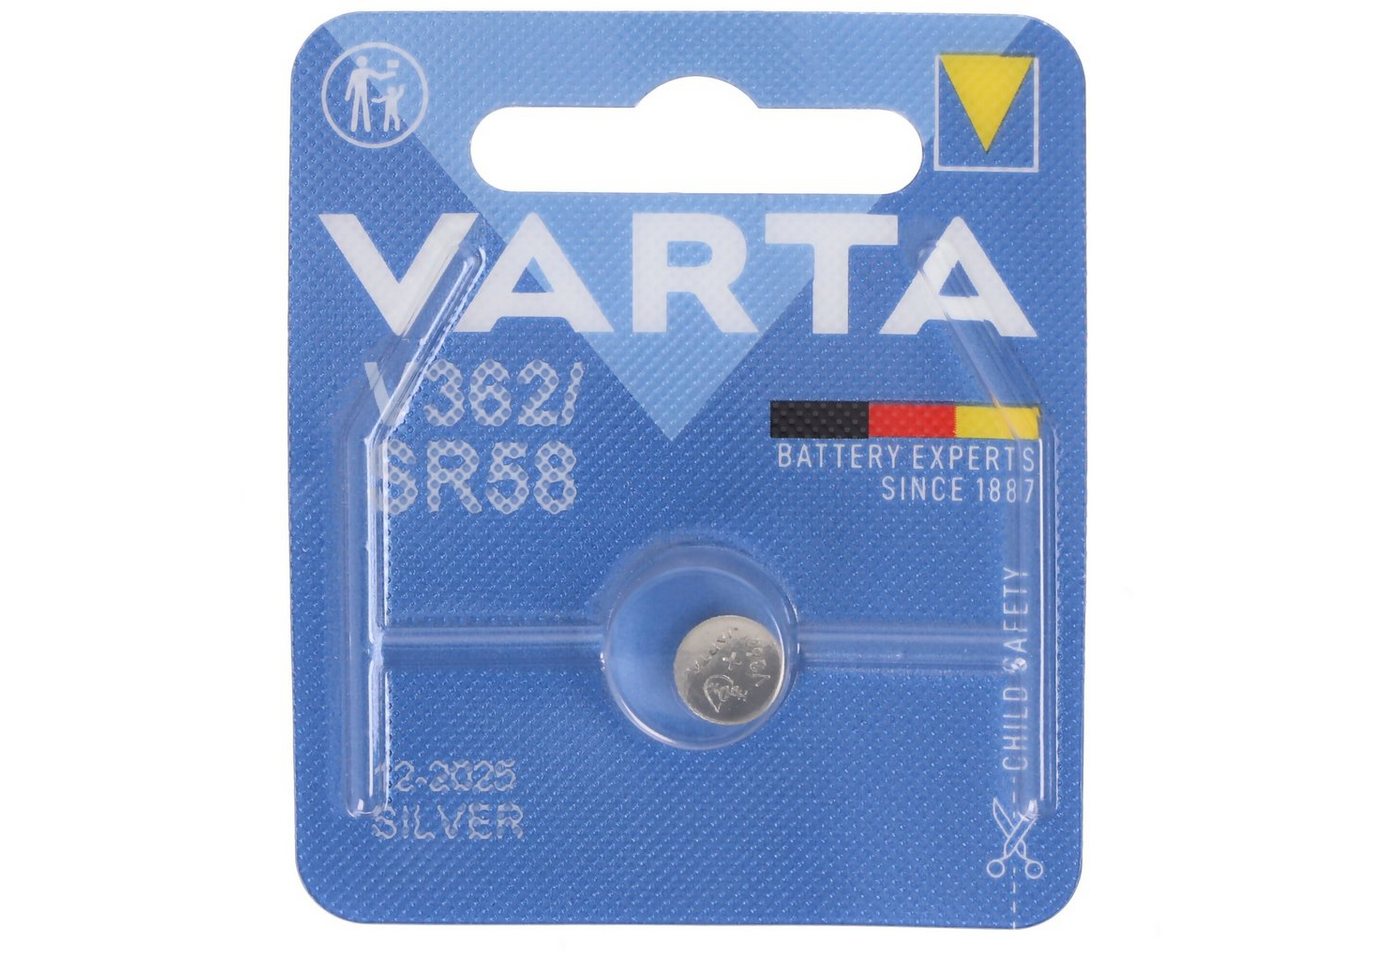 VARTA Varta Batterie Silver Oxide, Knopfzelle, 362, SR58, 1.55V Electronics Knopfzelle von VARTA